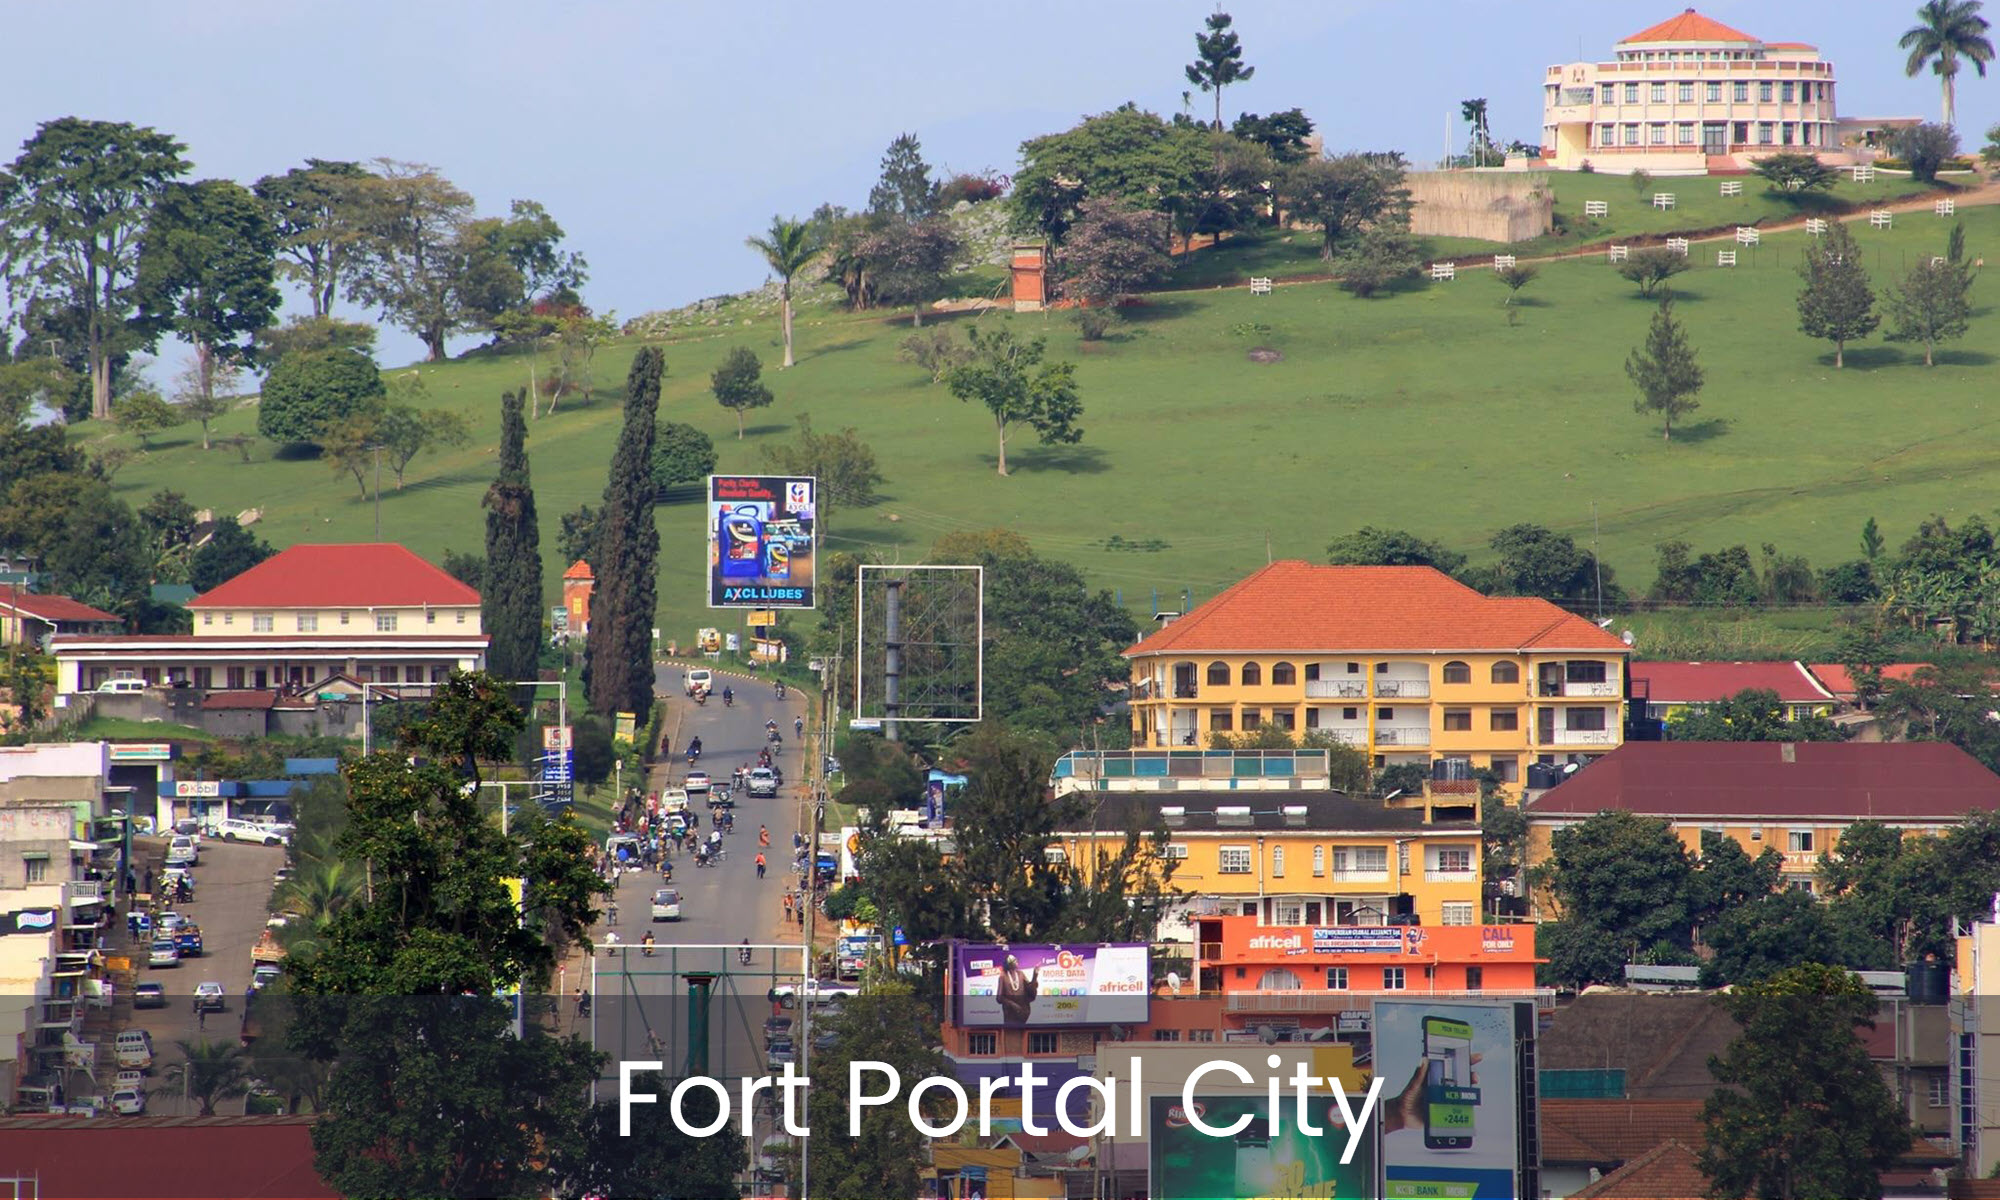 Fort Portal City Real Muloodi